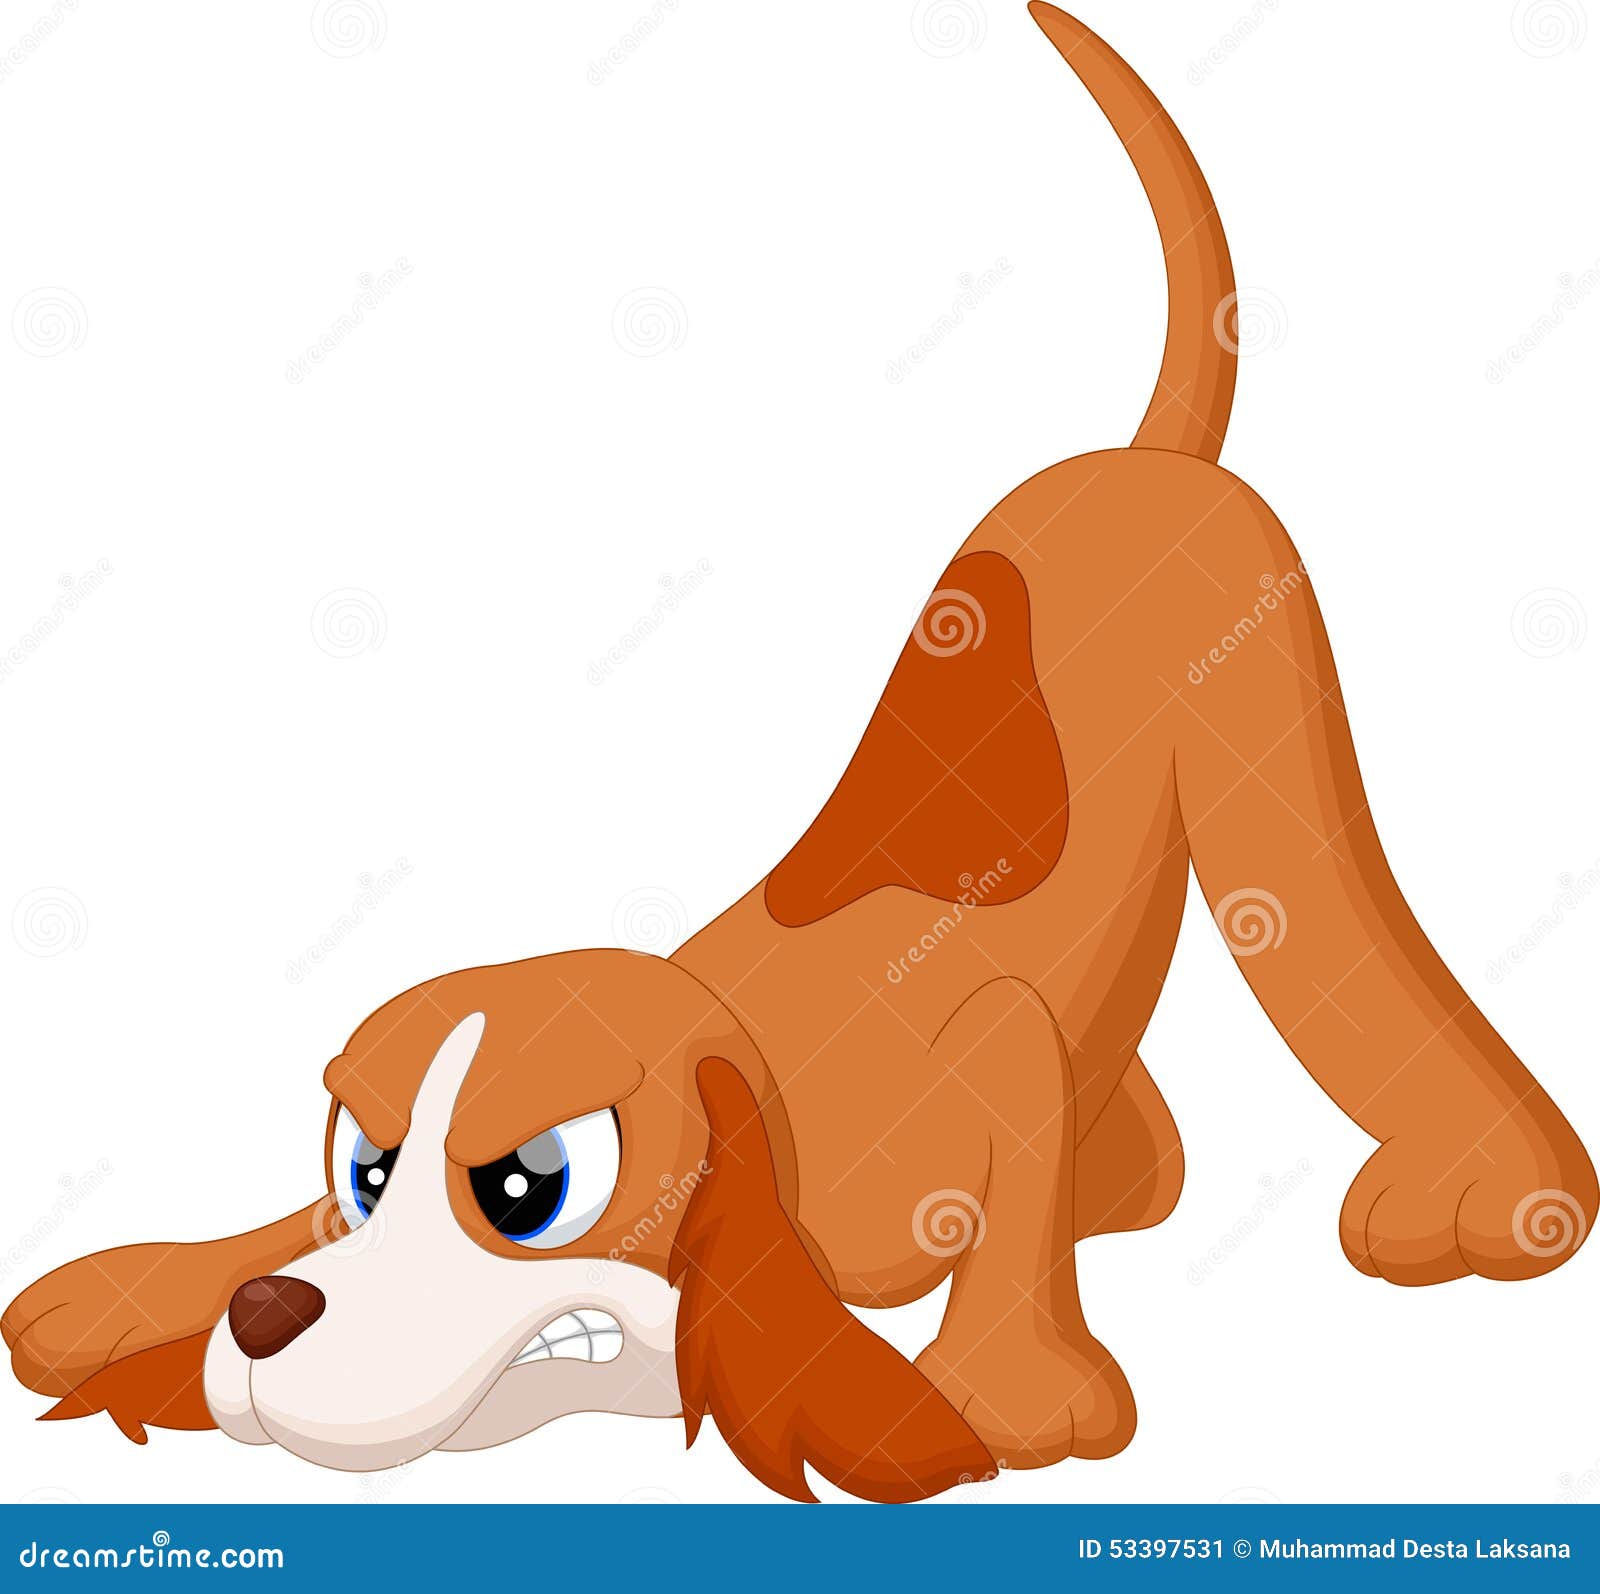 Angry dog cartoon stock illustration. Illustration of hound - 53397531